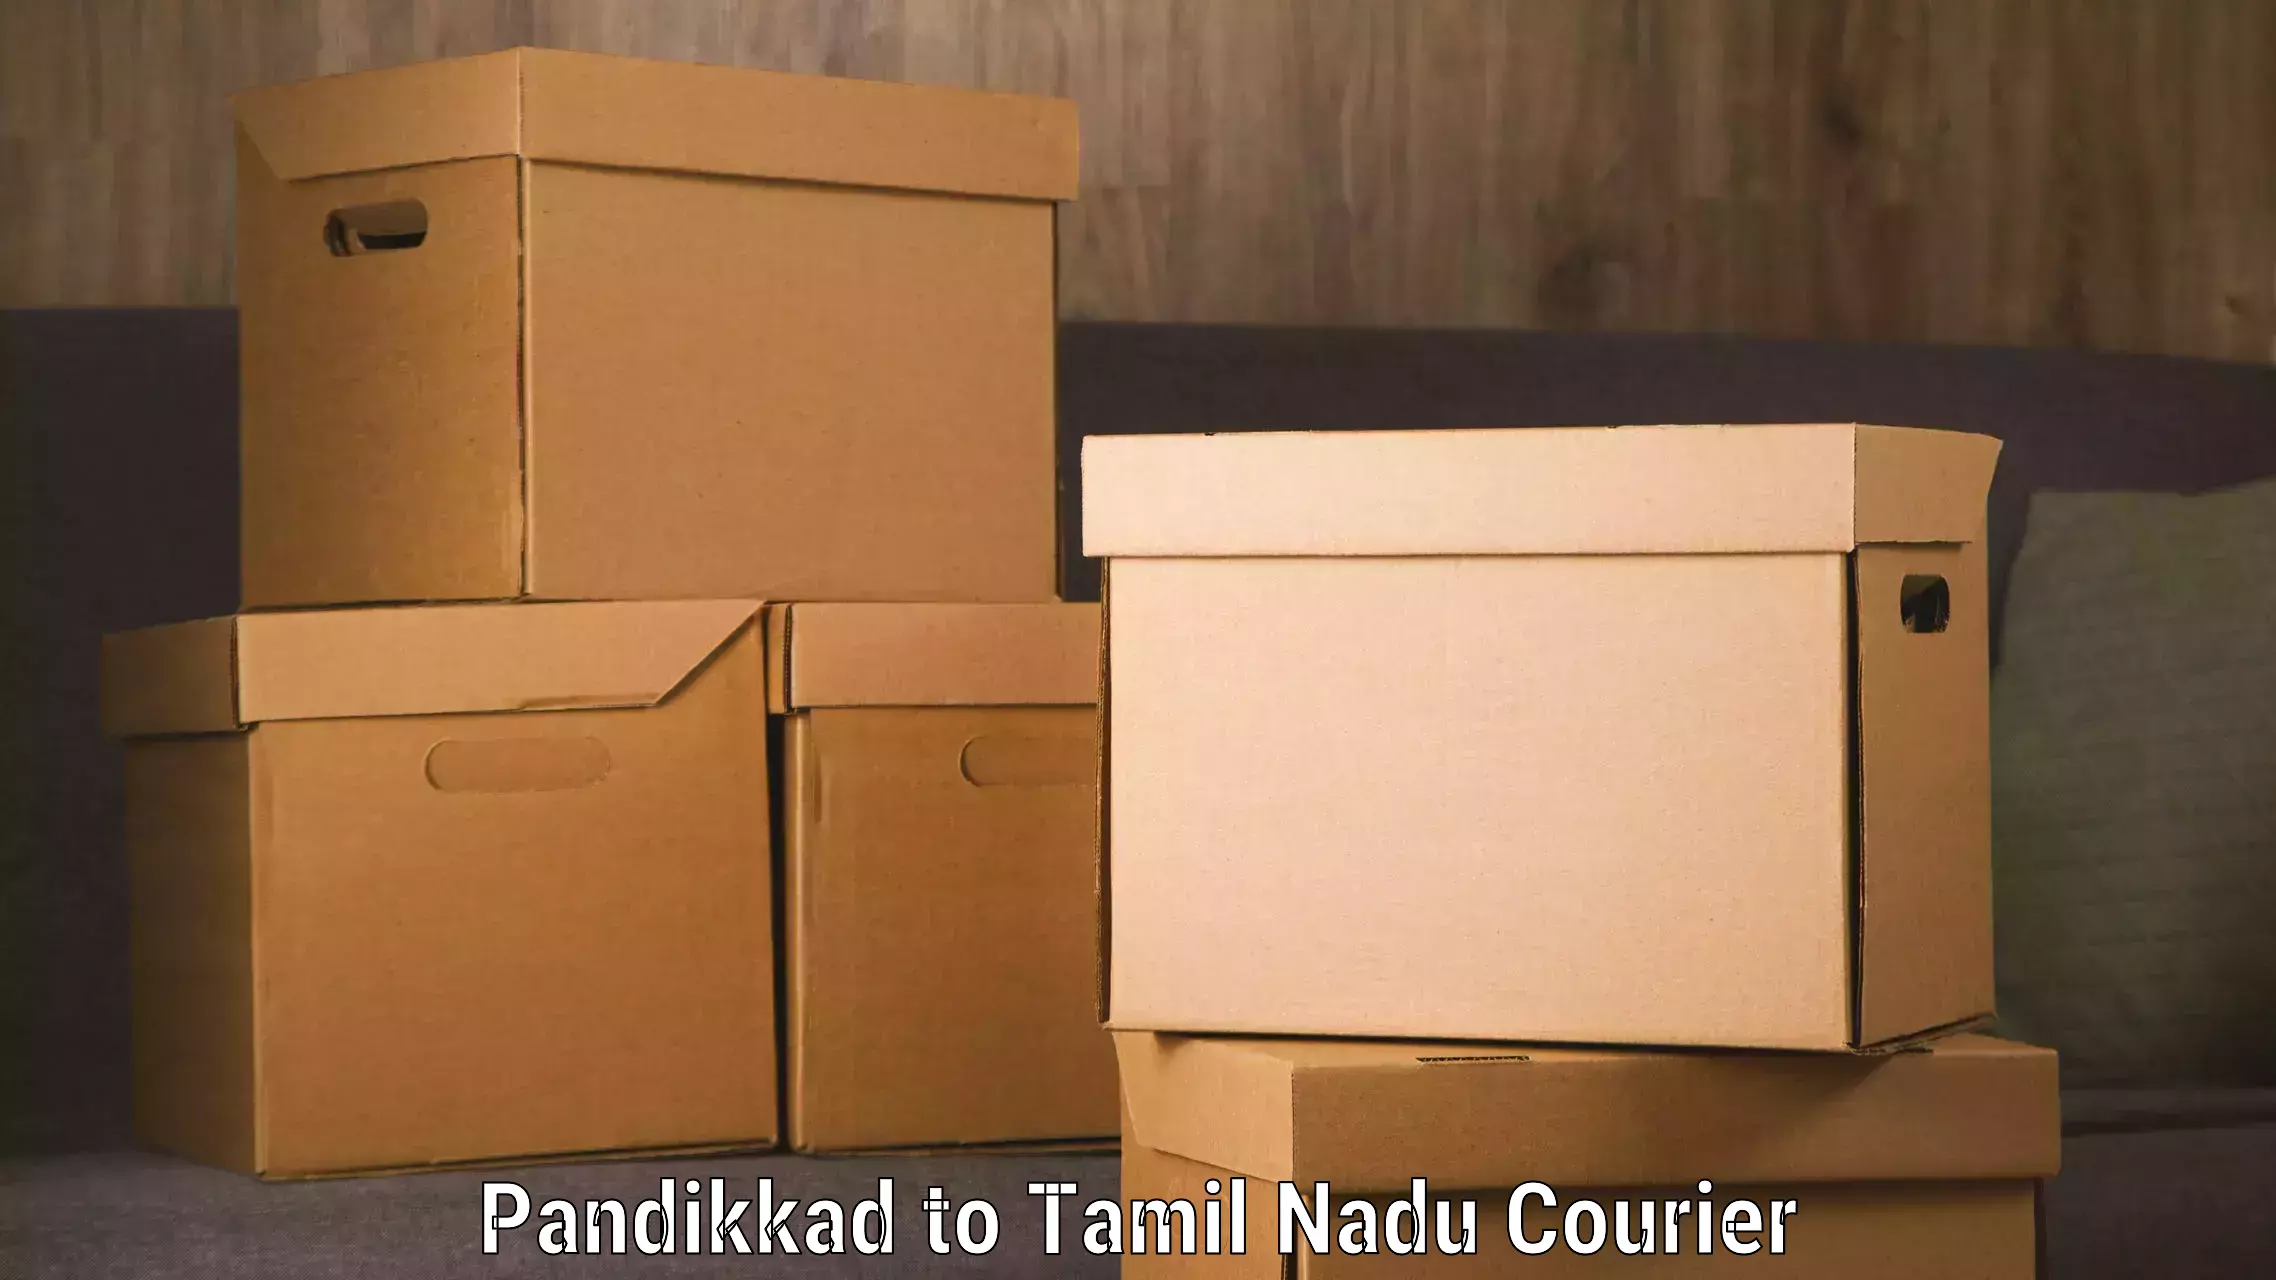 Courier insurance Pandikkad to Thiruporur